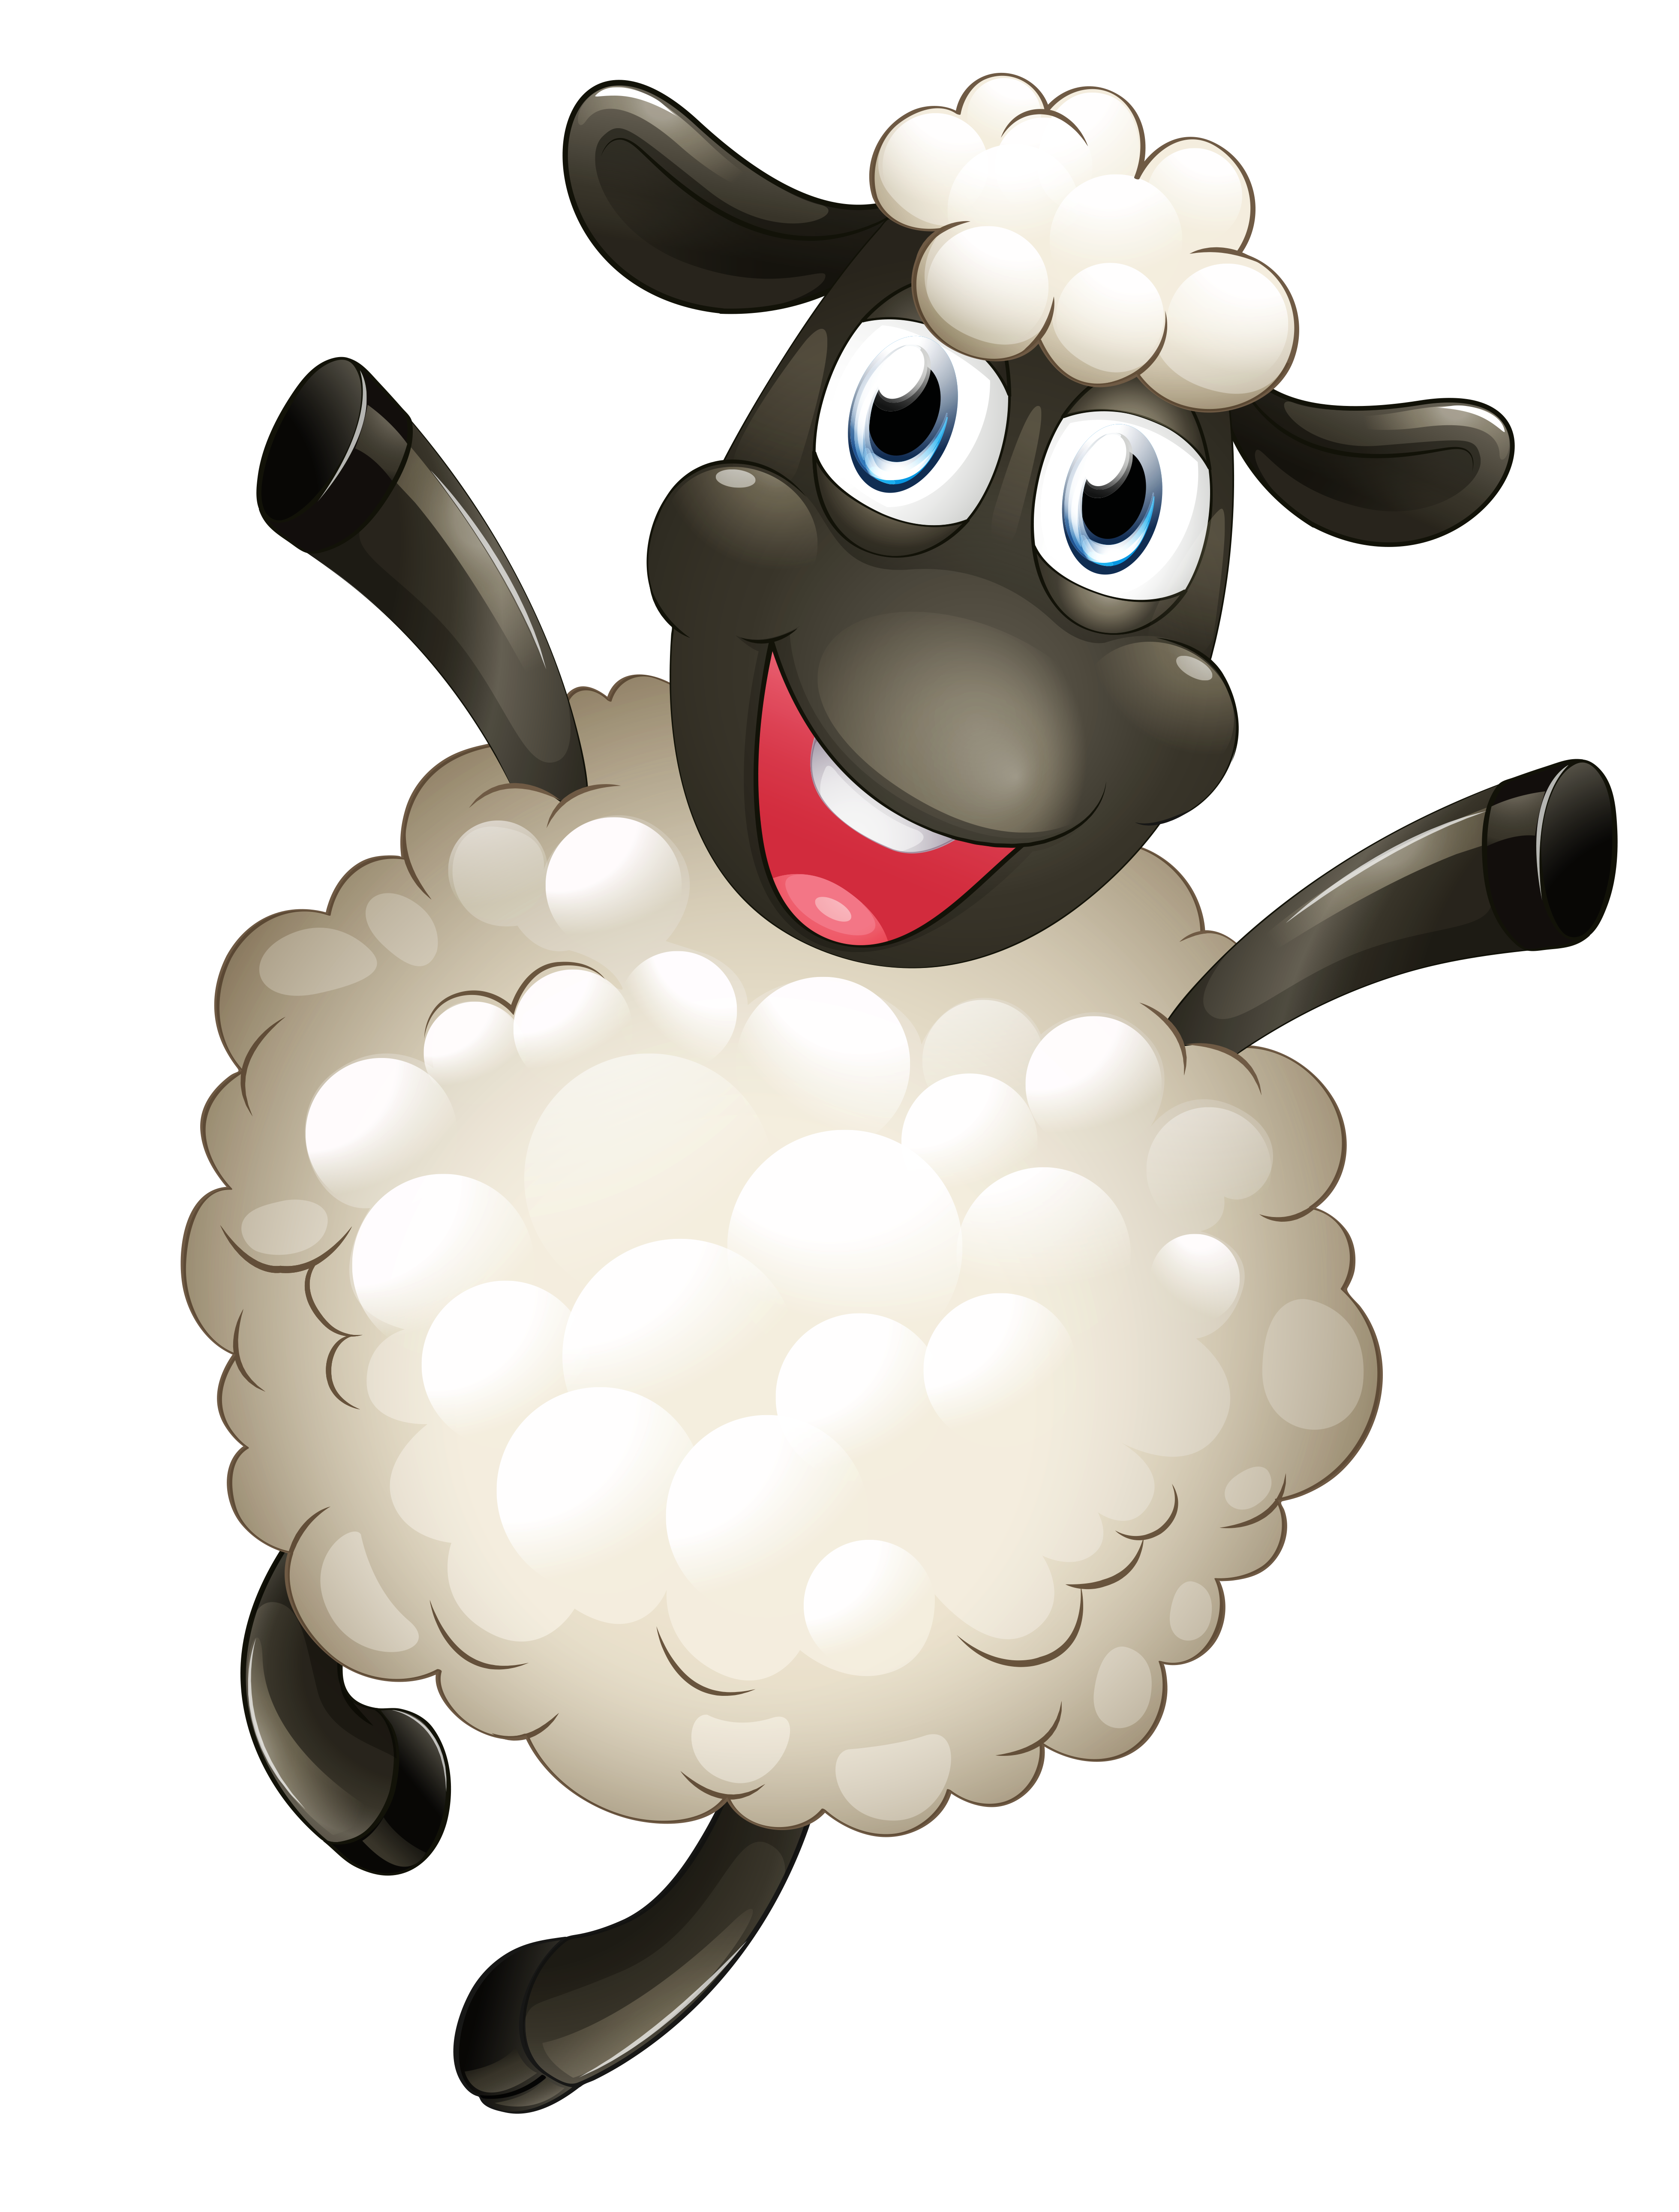 Sheep Sticker Cartoon Free Download Image Clipart